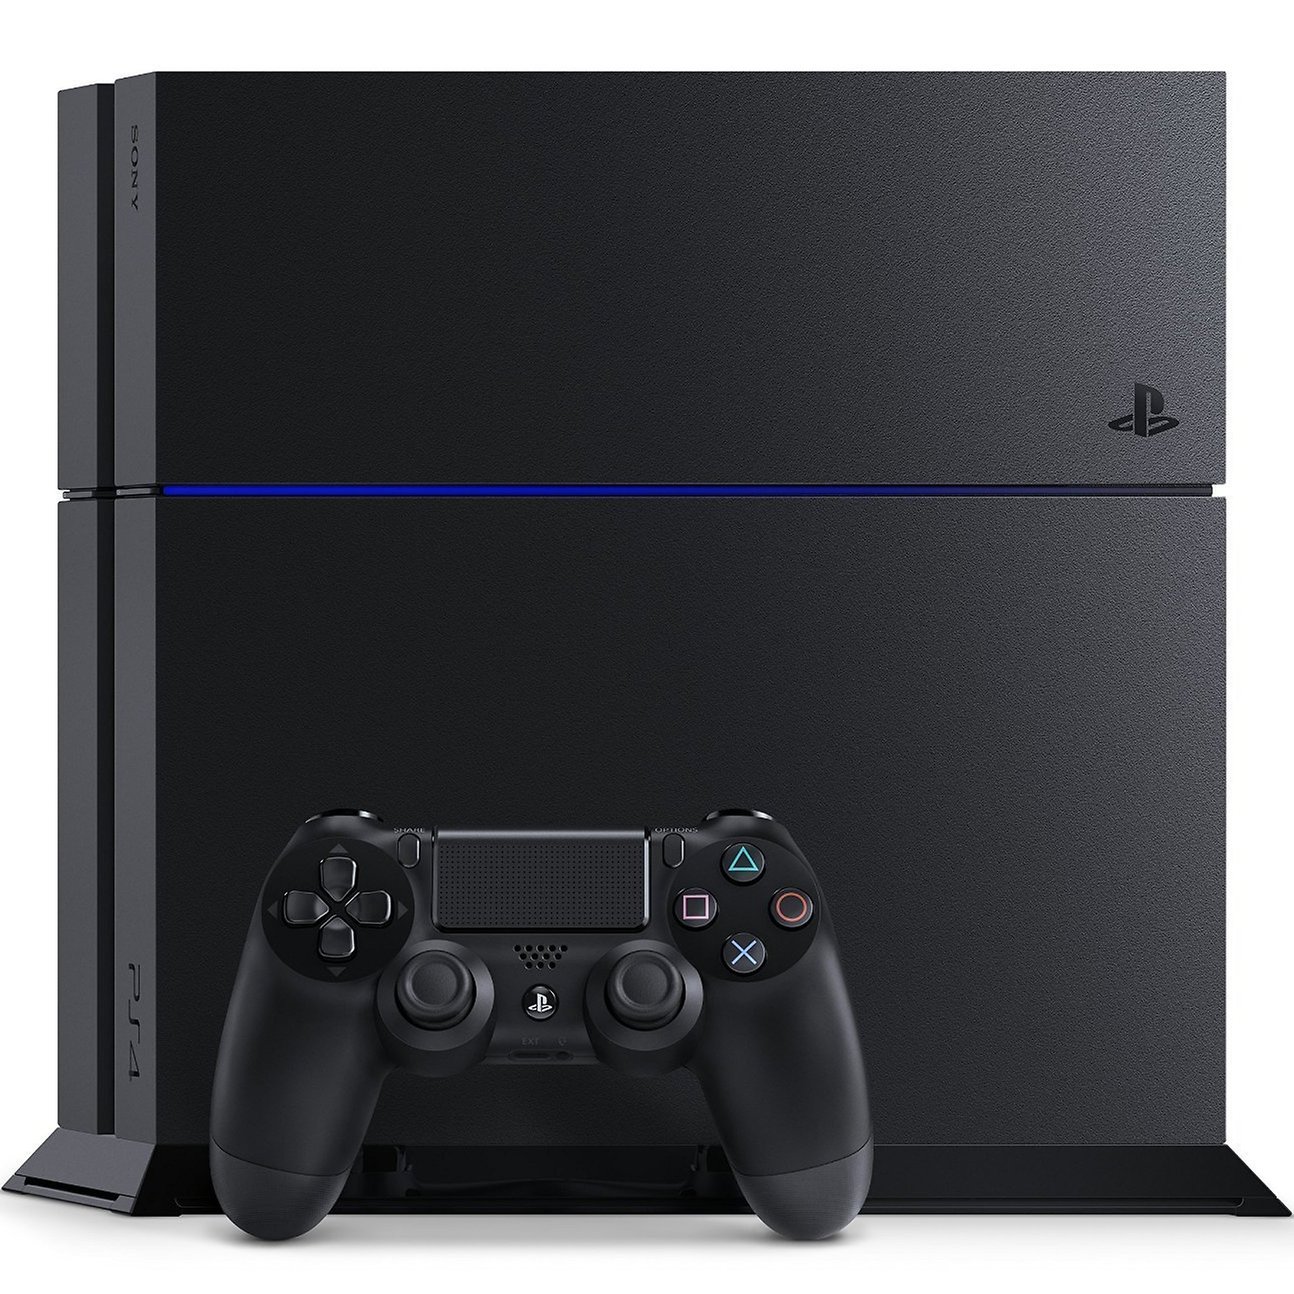 Vale a pena assinar a PlayStation Plus?